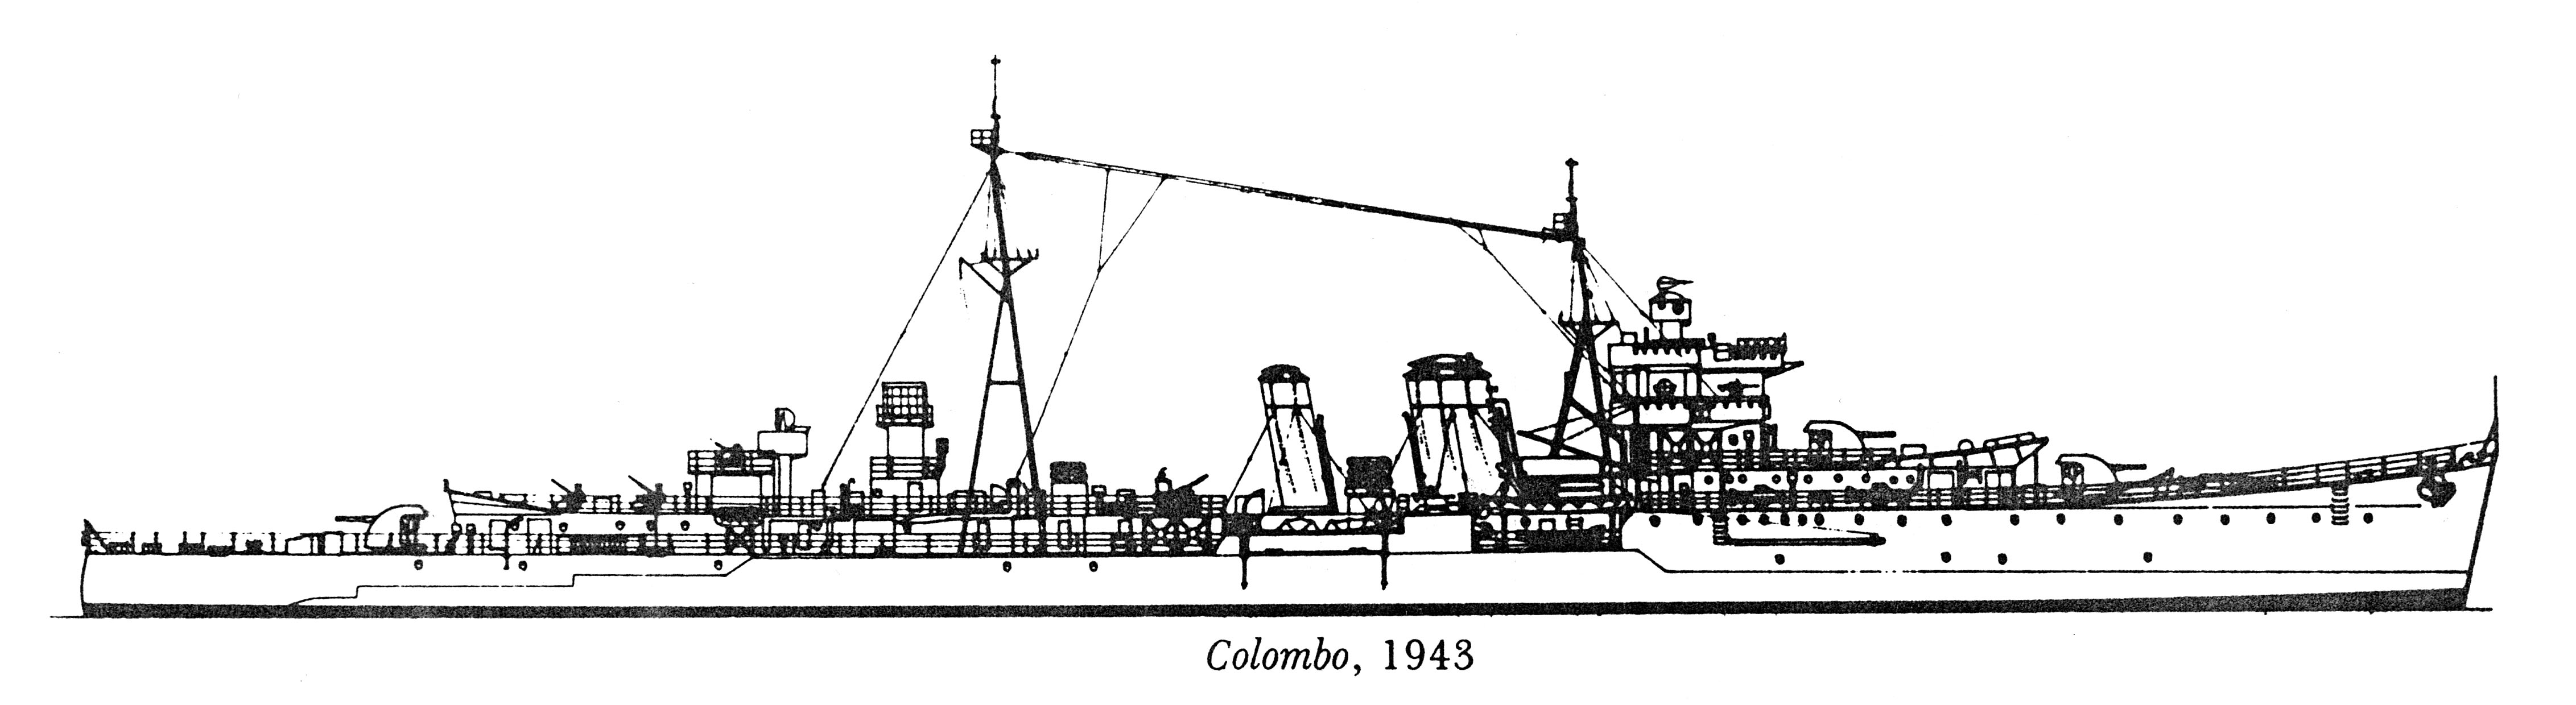 08 Colombo 1943.jpg